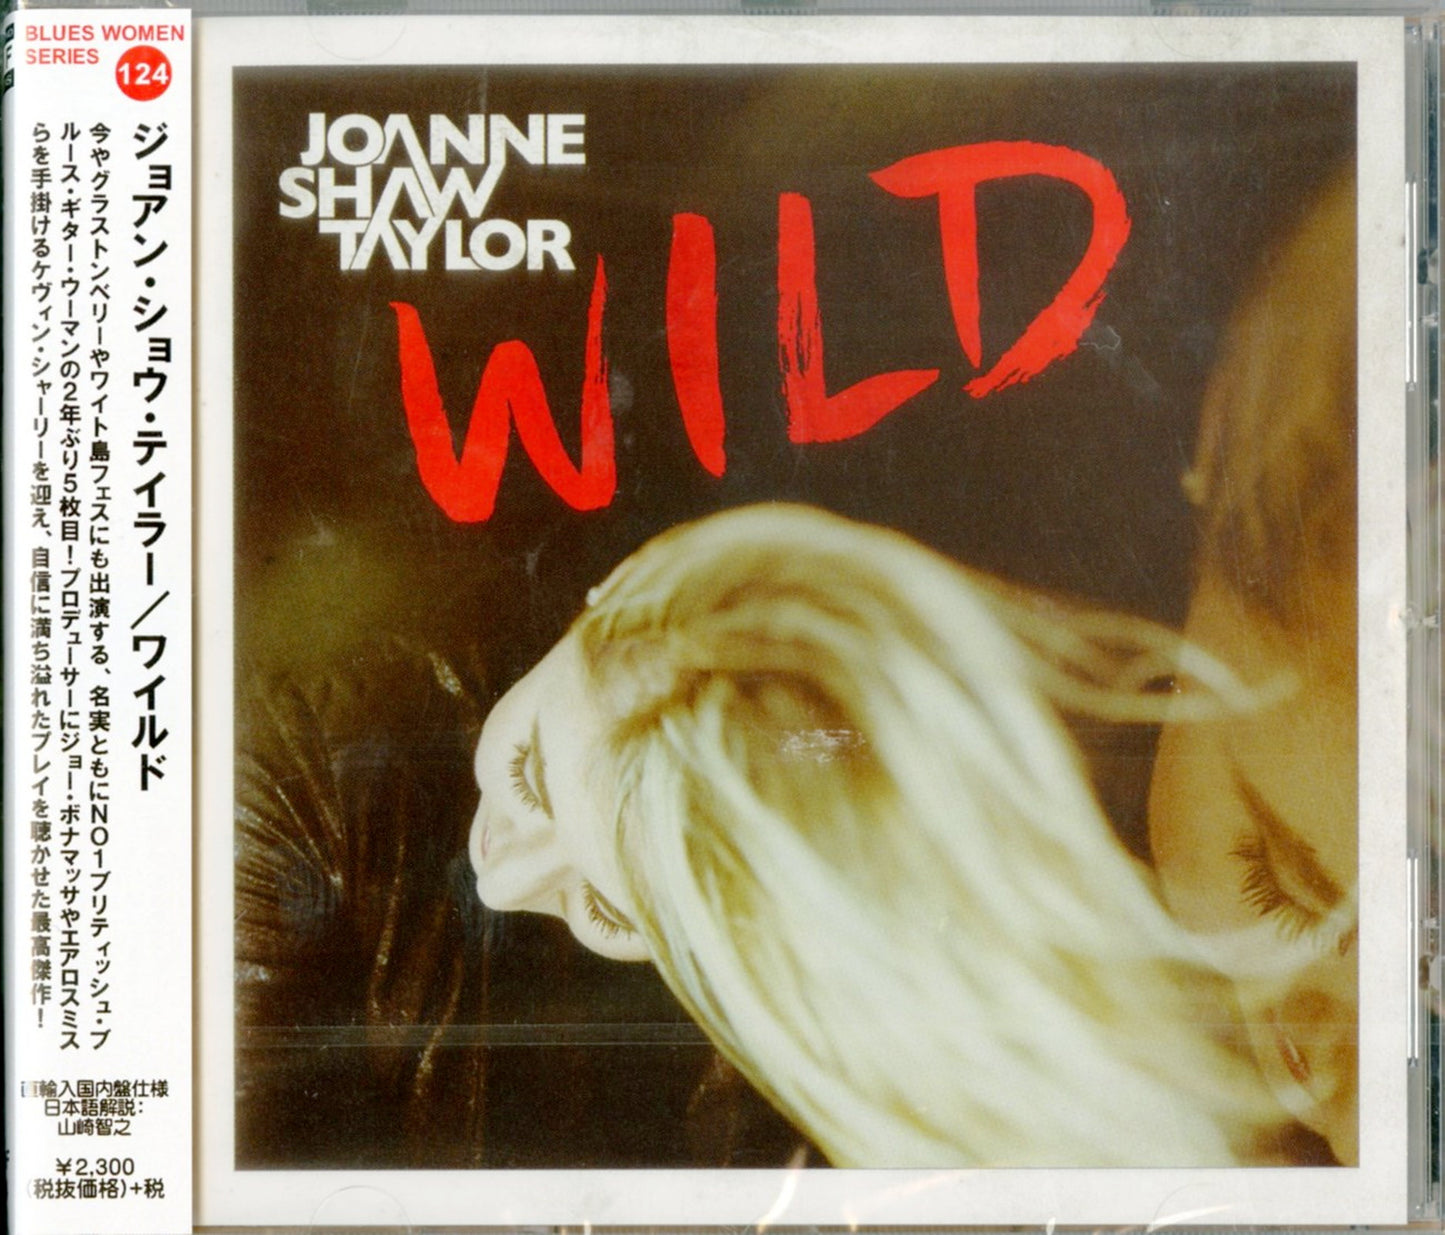 Joanne Shaw Taylor - Wild - Japan CD